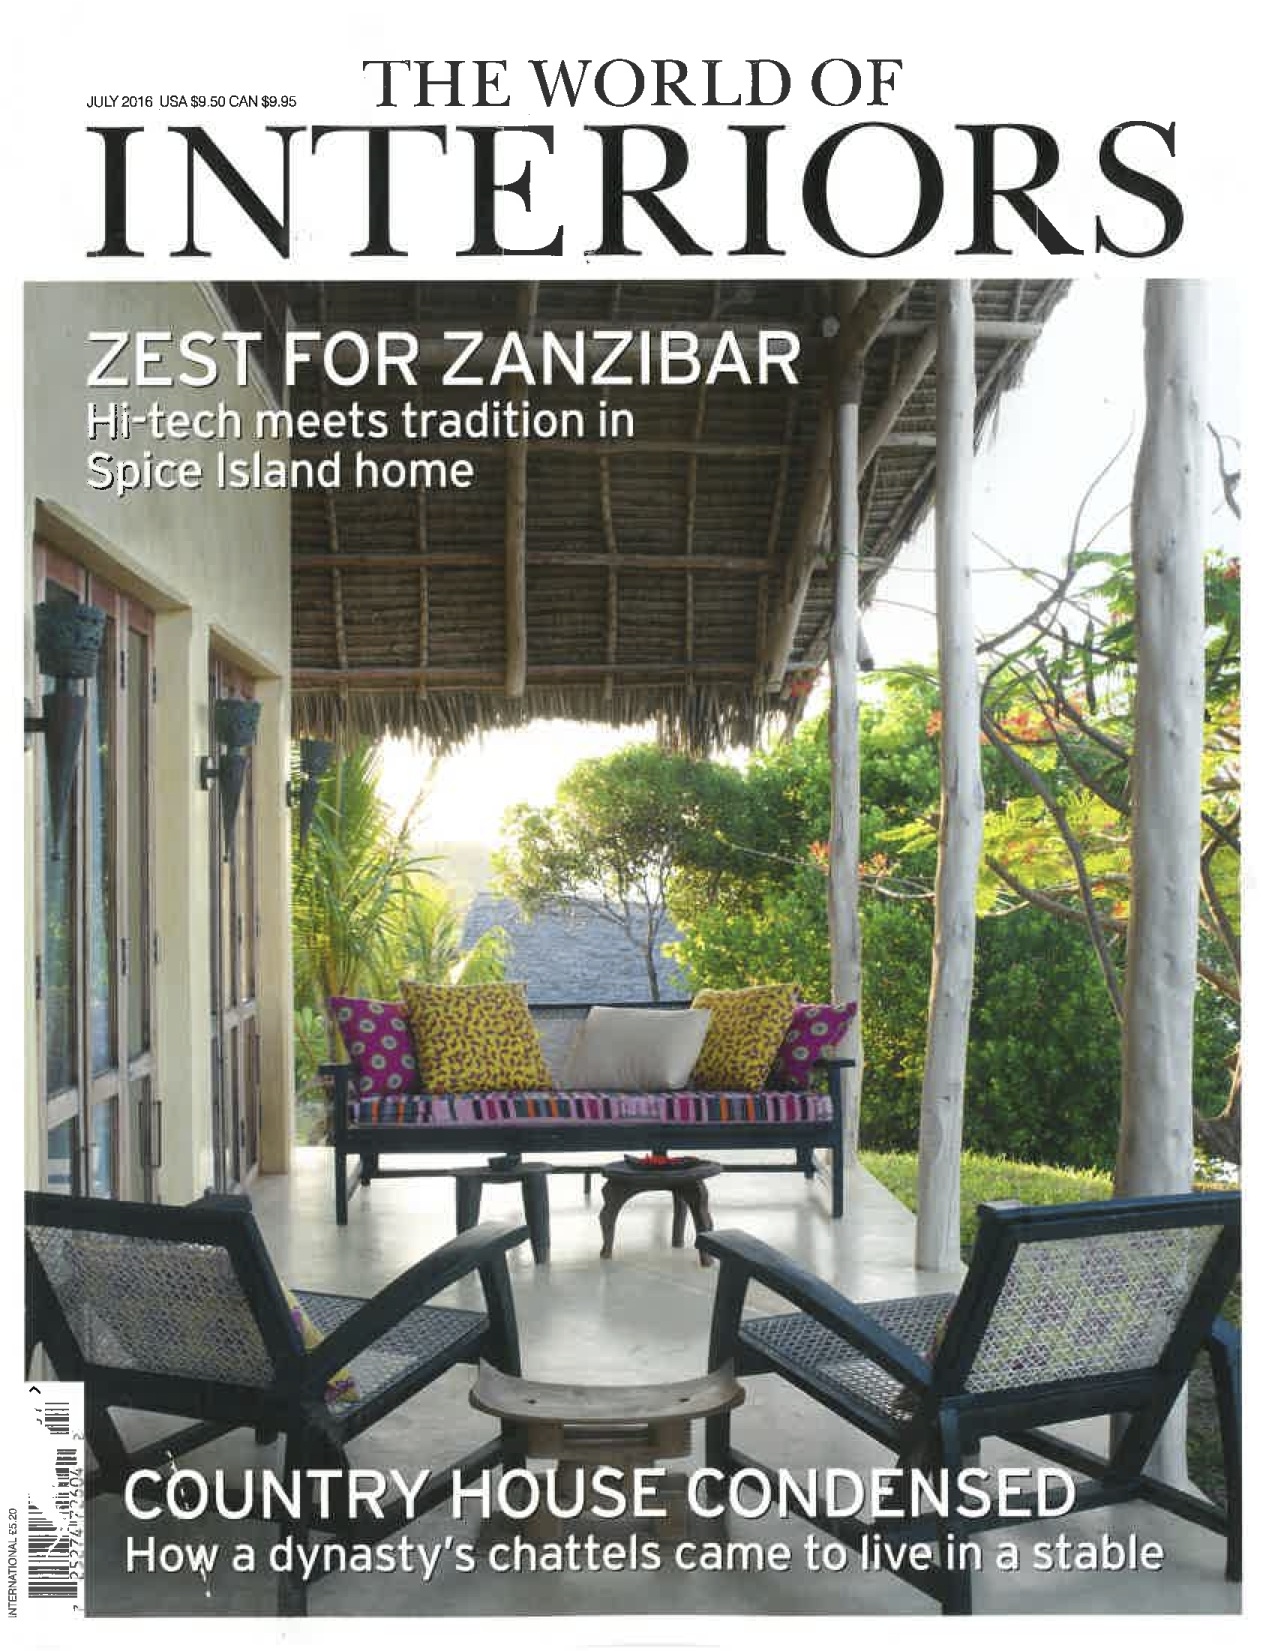 World of Interiors July16' Cover.jpg